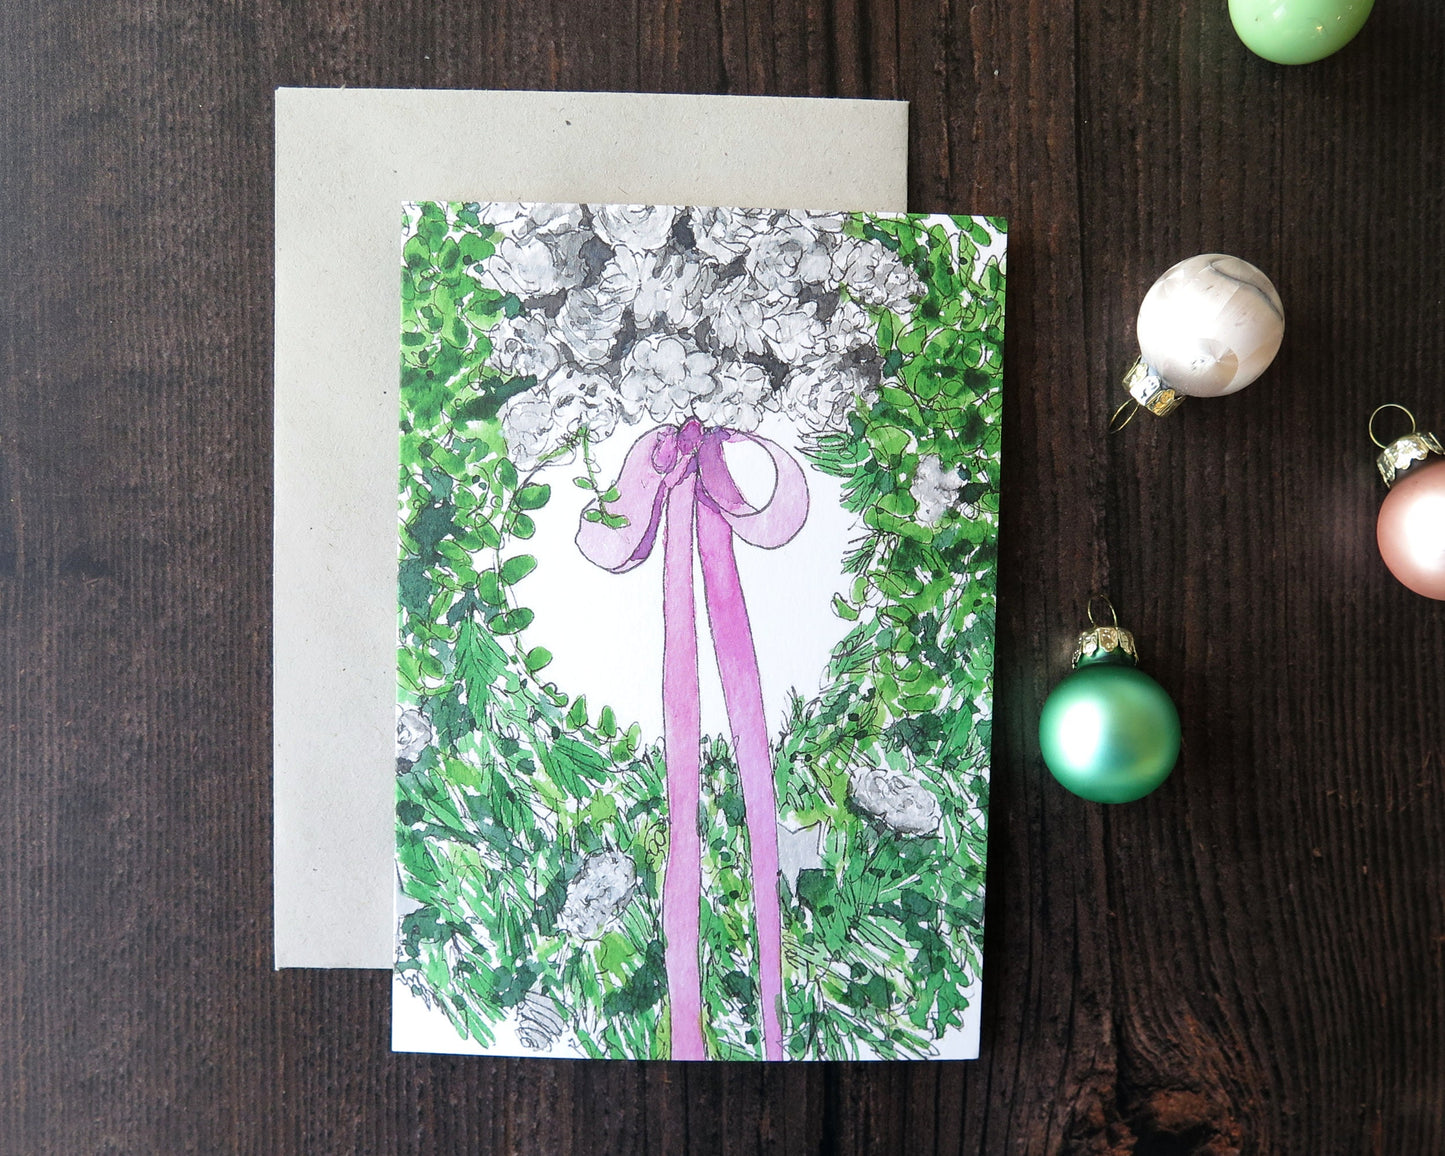 Christmas Ribbon Wreath Card